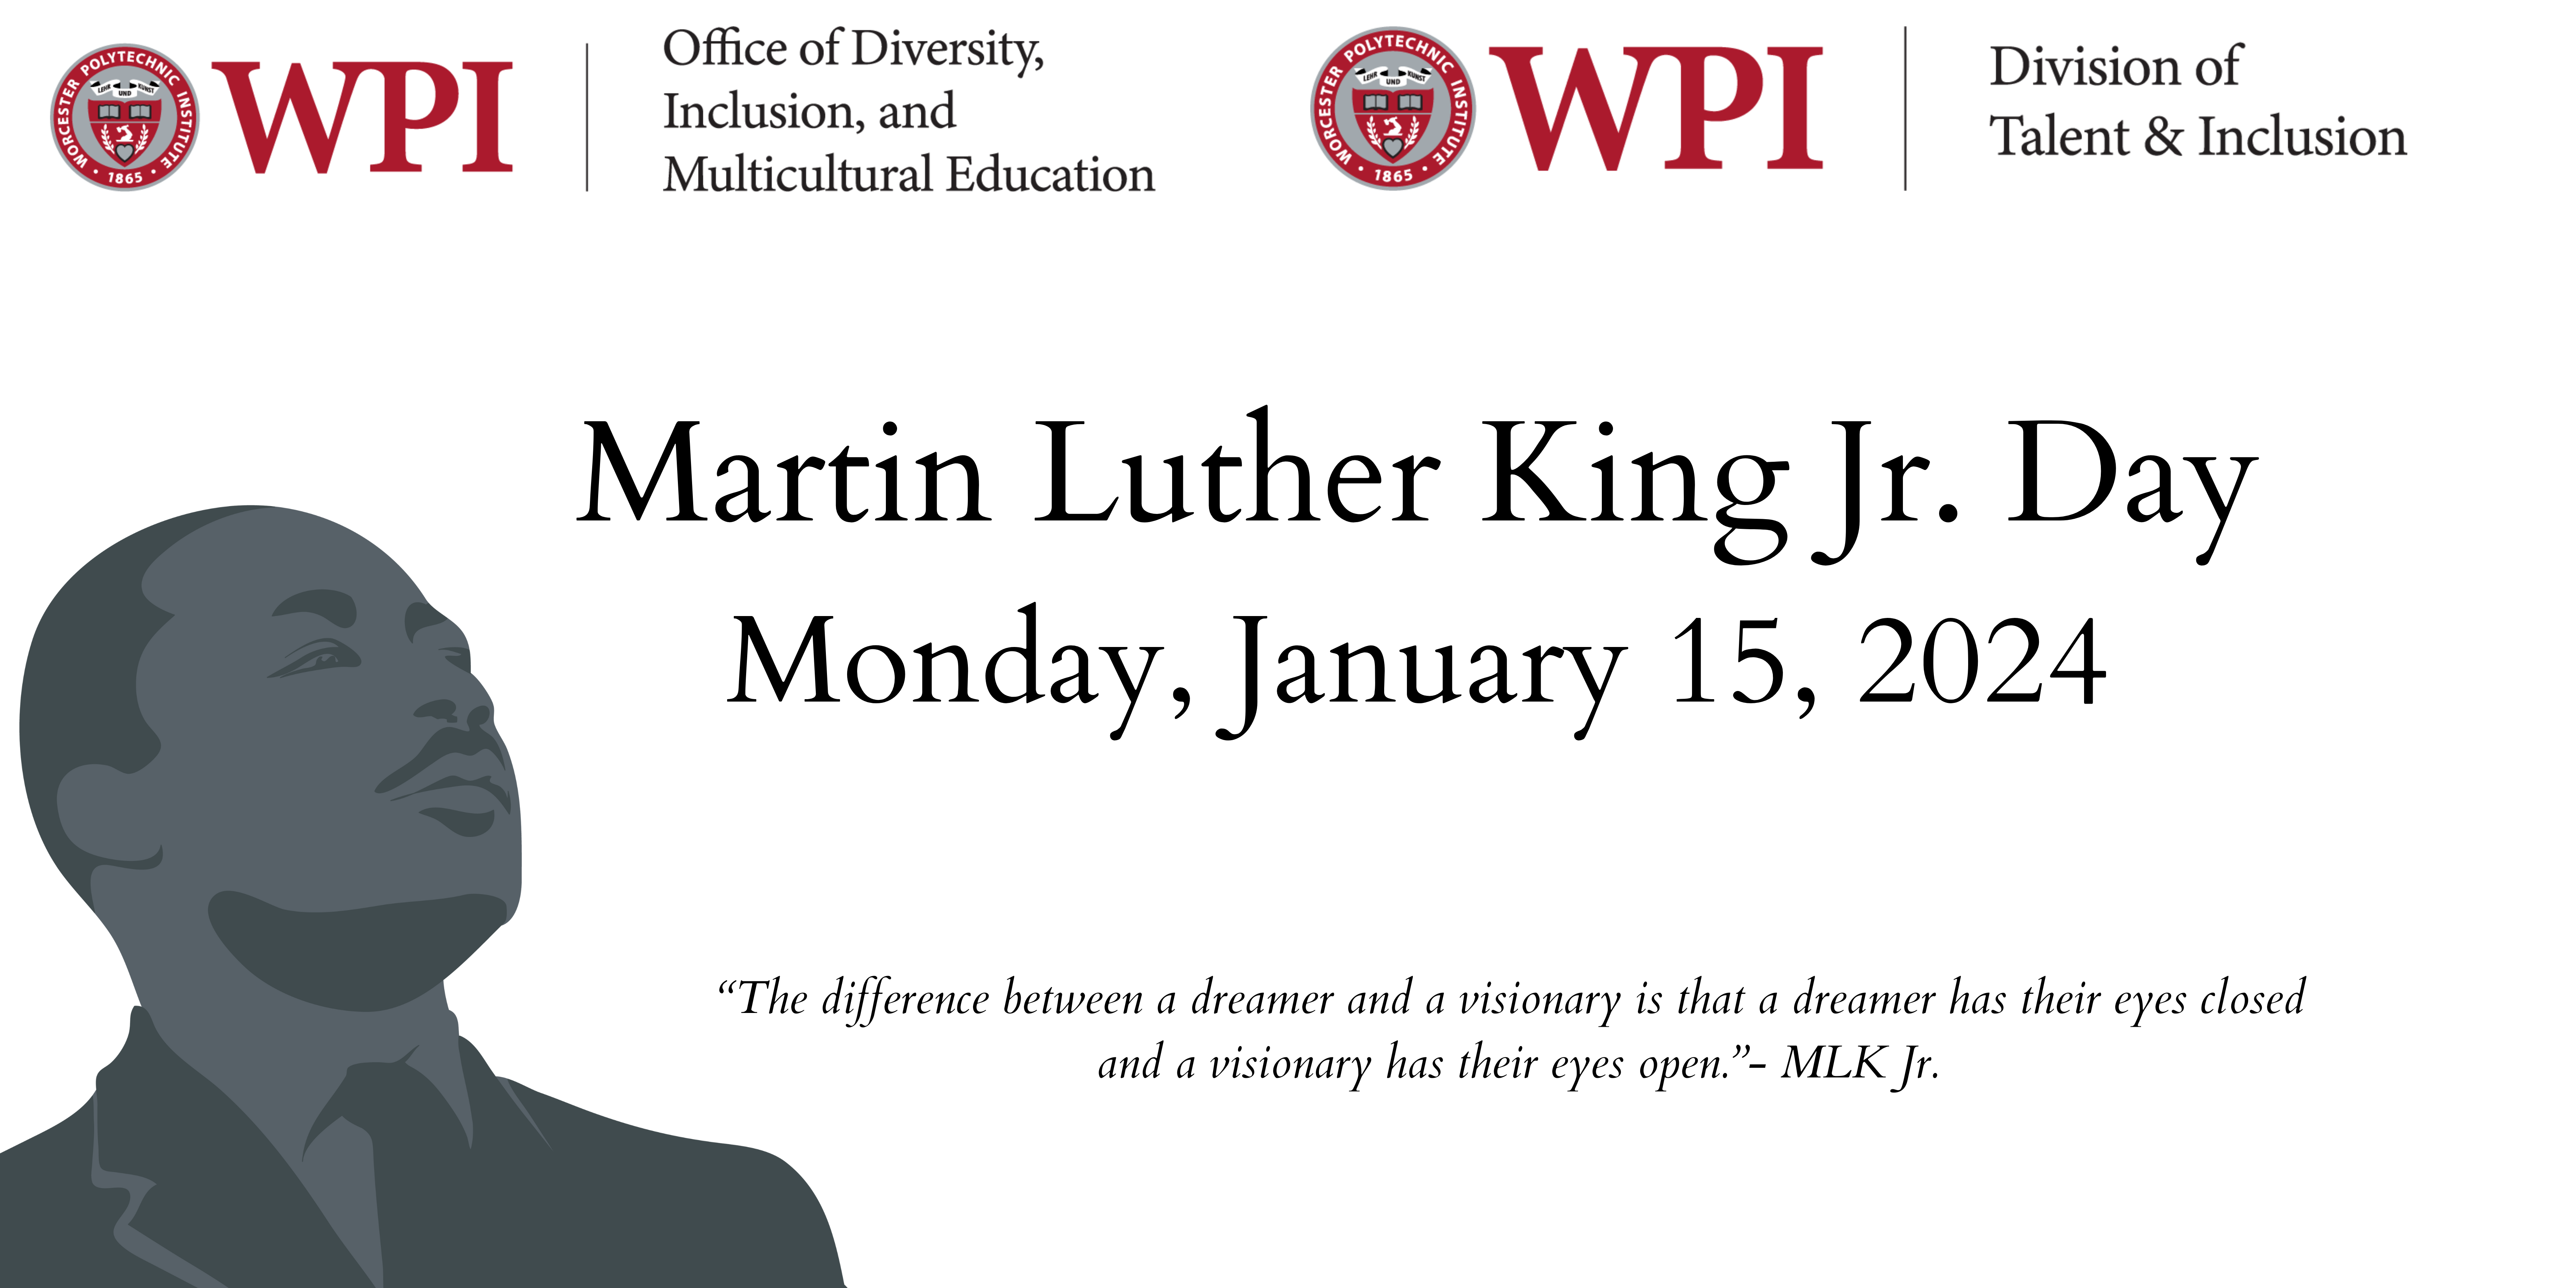 WPI Celebrates Martin Luther King Jr. Day 2024 Worcester Polytechnic